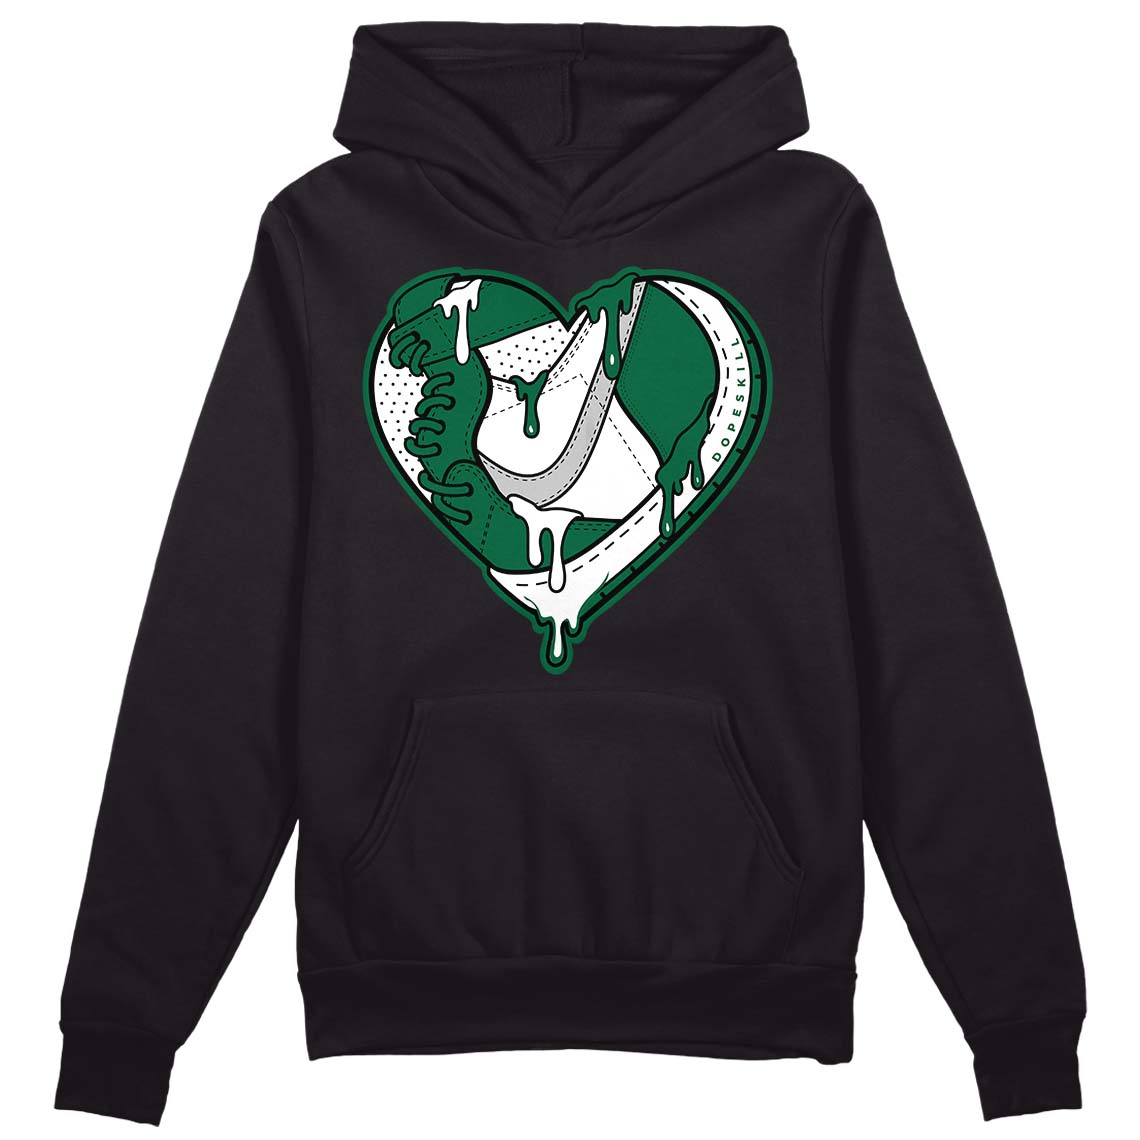 Gorge Green 1s DopeSkill Hoodie Sweatshirt Heart Jordan 1 Graphic - Black 